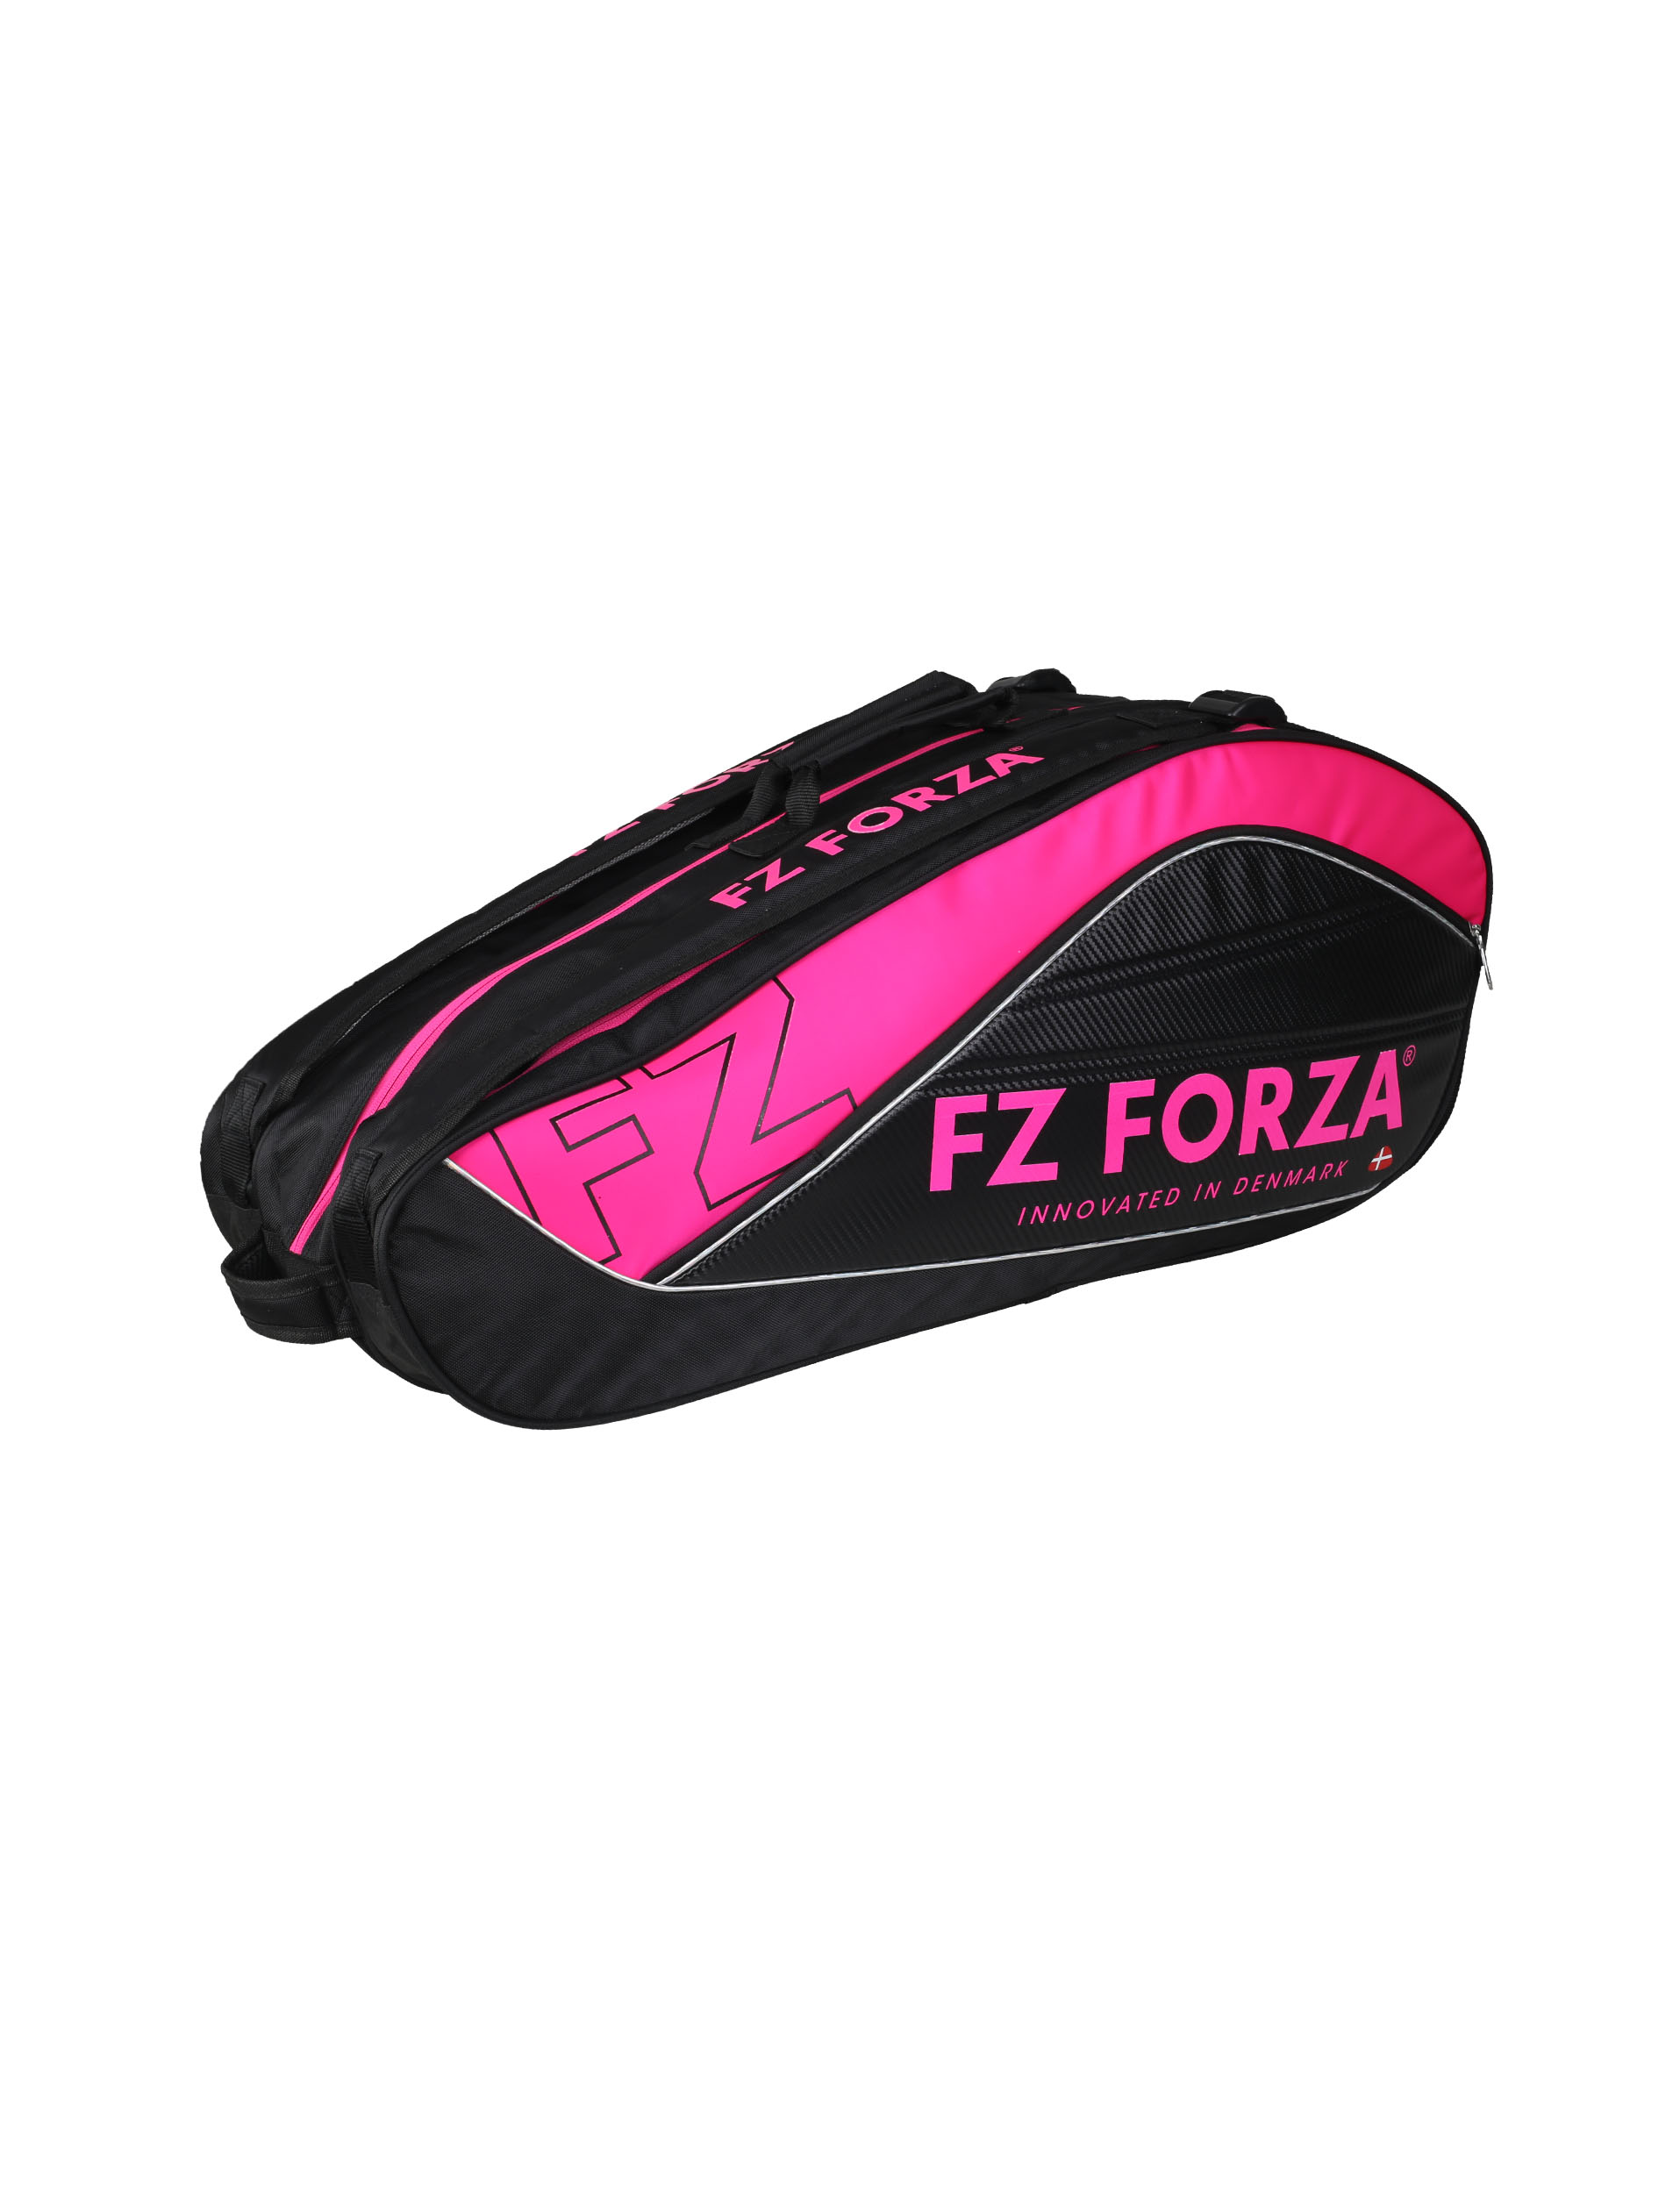 Сумка для бадминтона. Сумка для ракеток FZ Forza. Сумка для ракеток бадминтона FZ Forza. Сумка для бадминтона FZ Forza MB Collab 6 PCS. Бадминтонная сумка Forza.